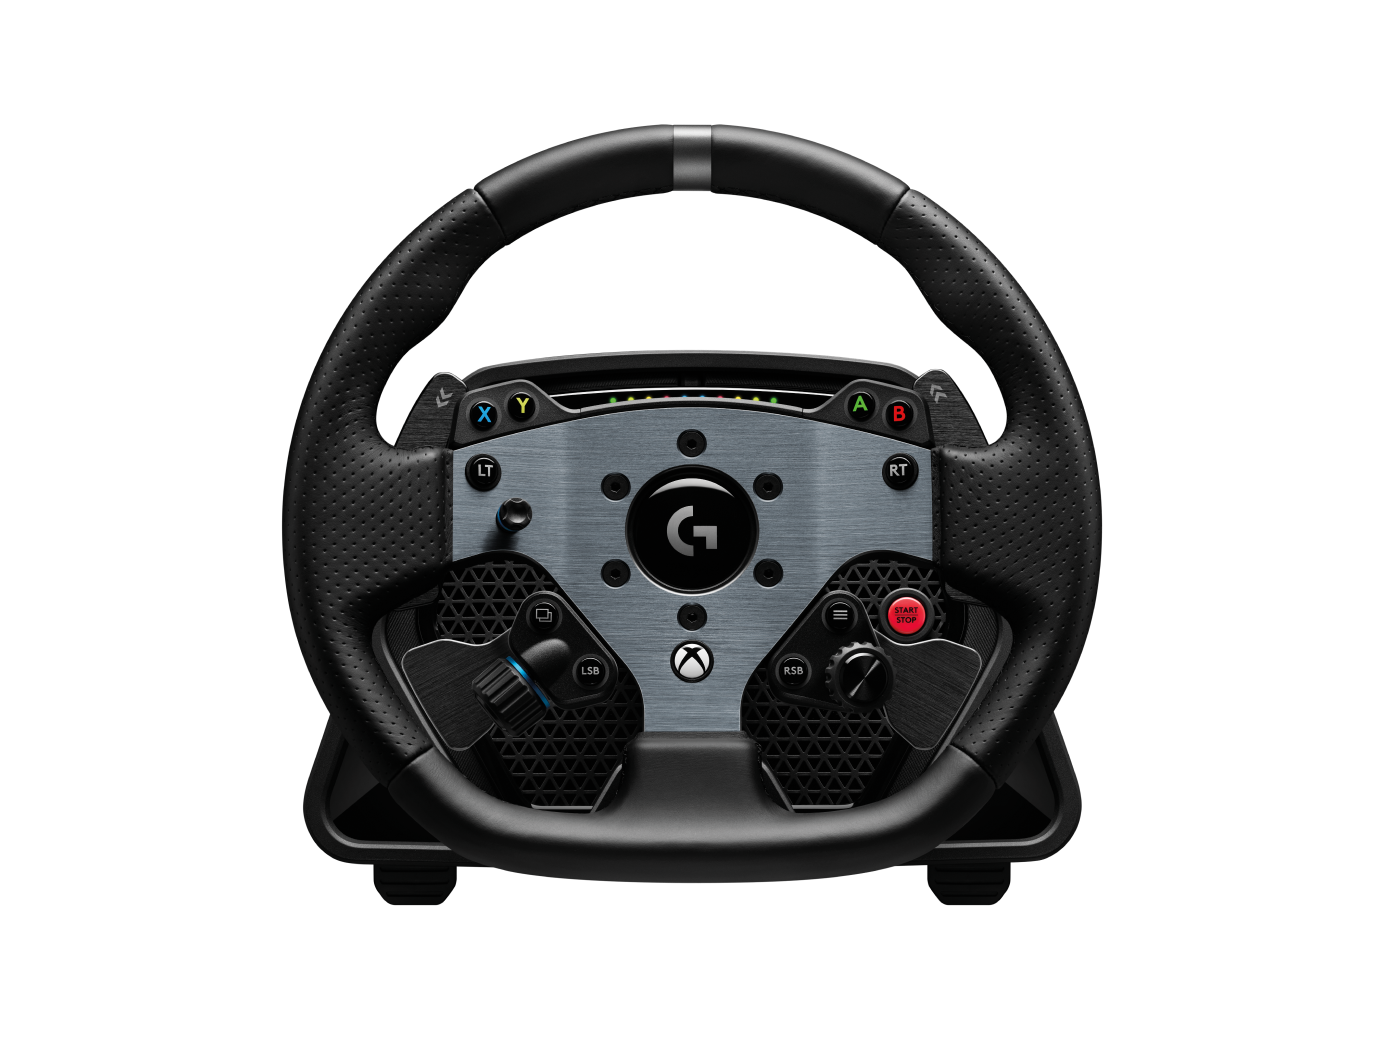 Spytte ud hjul Hub PRO Racing Wheel for Playstation, Xbox, PC | Logitech G